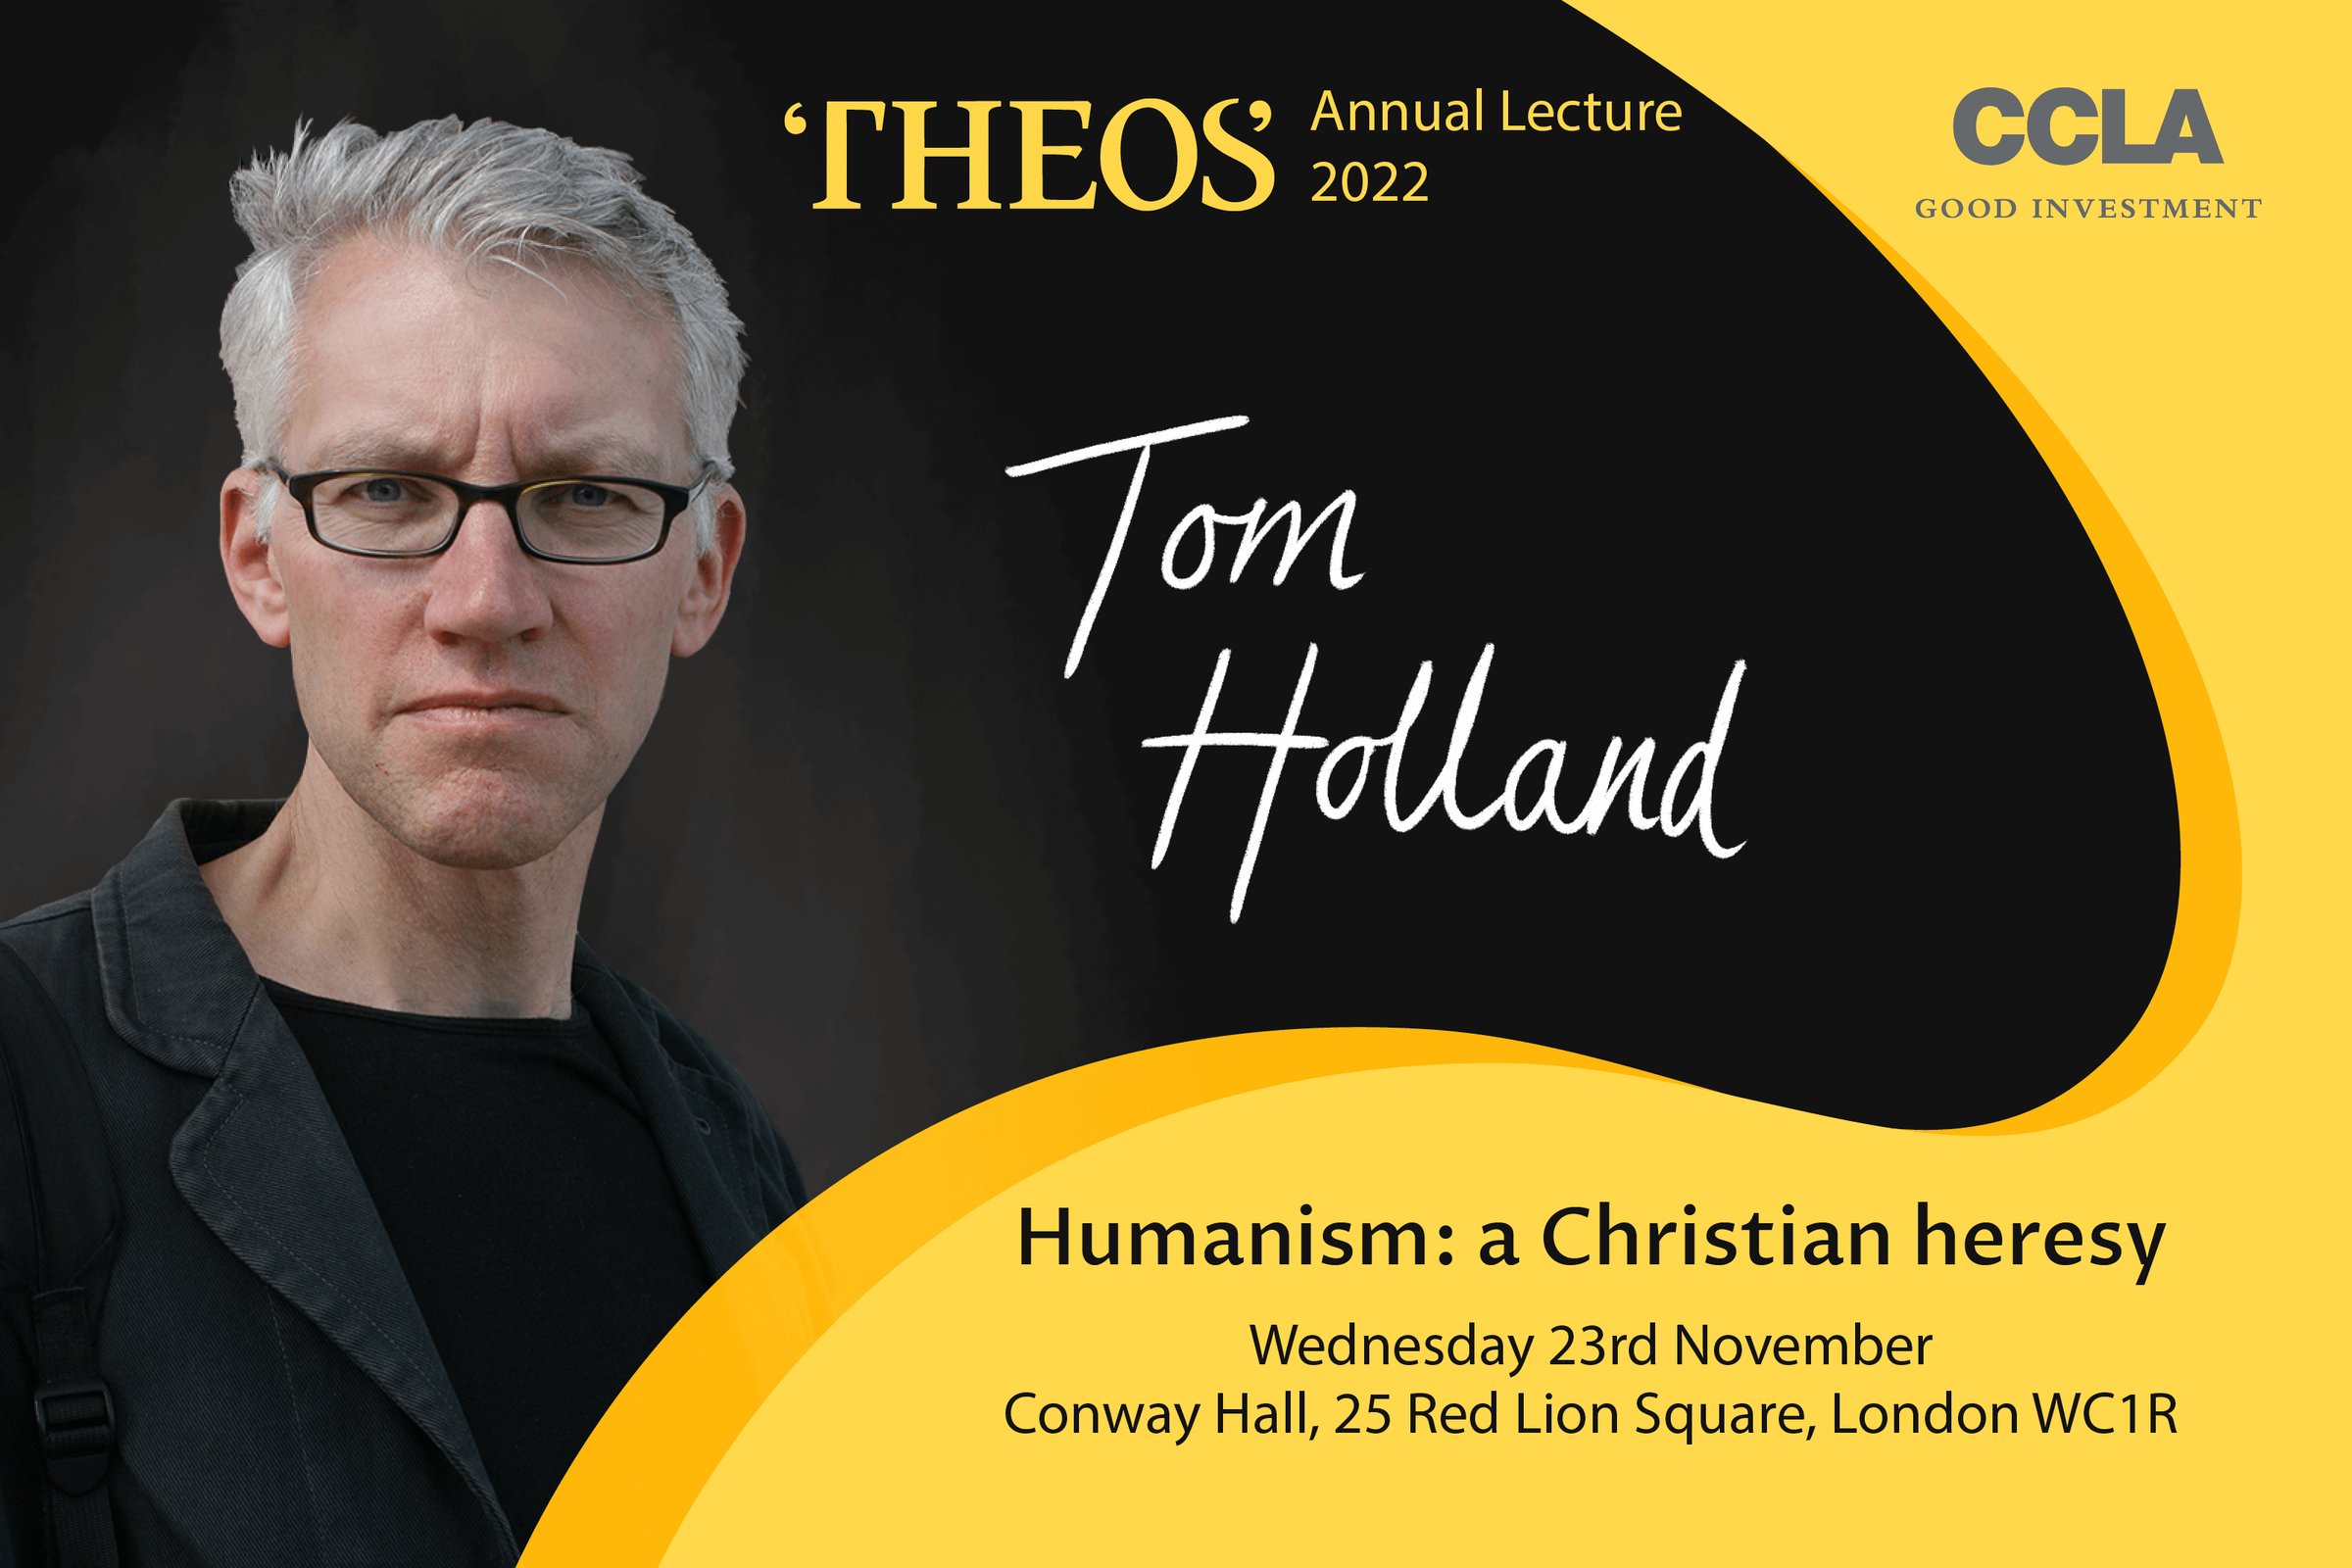 Humanism: a Christian heresy